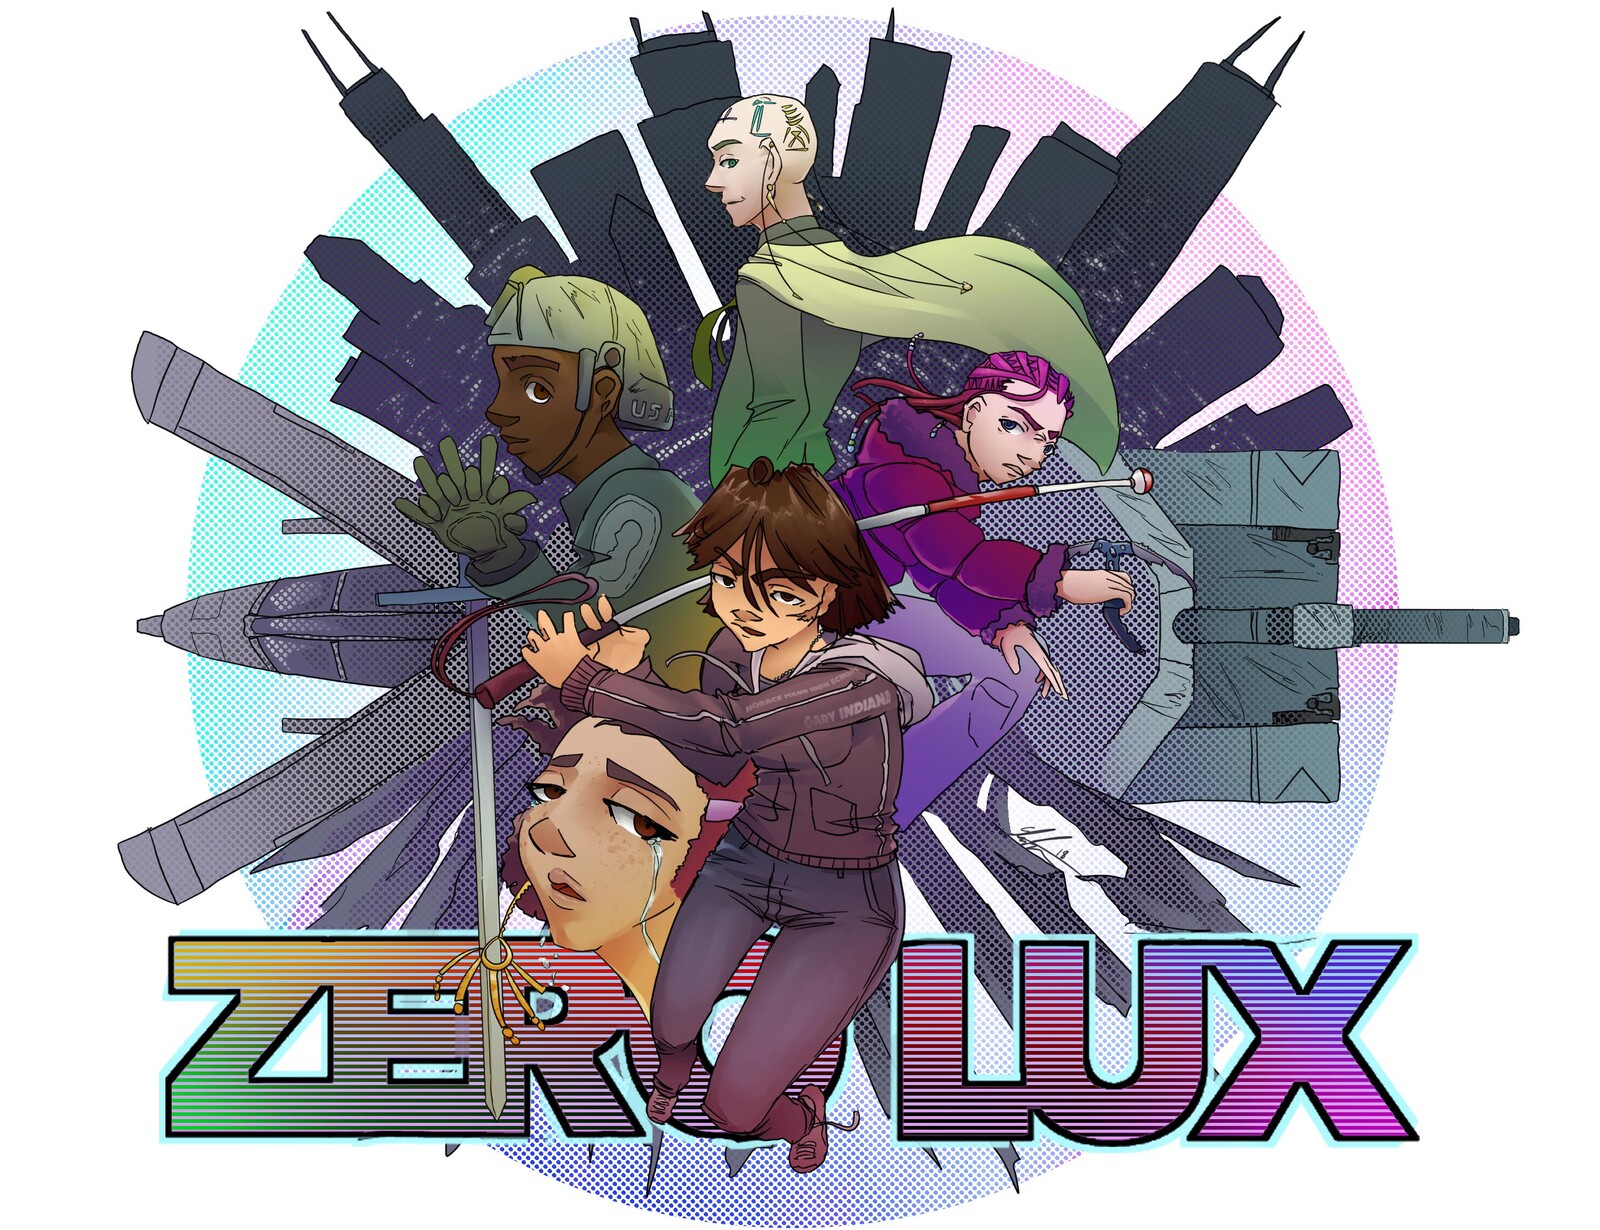 Zero Lux Promotional Image